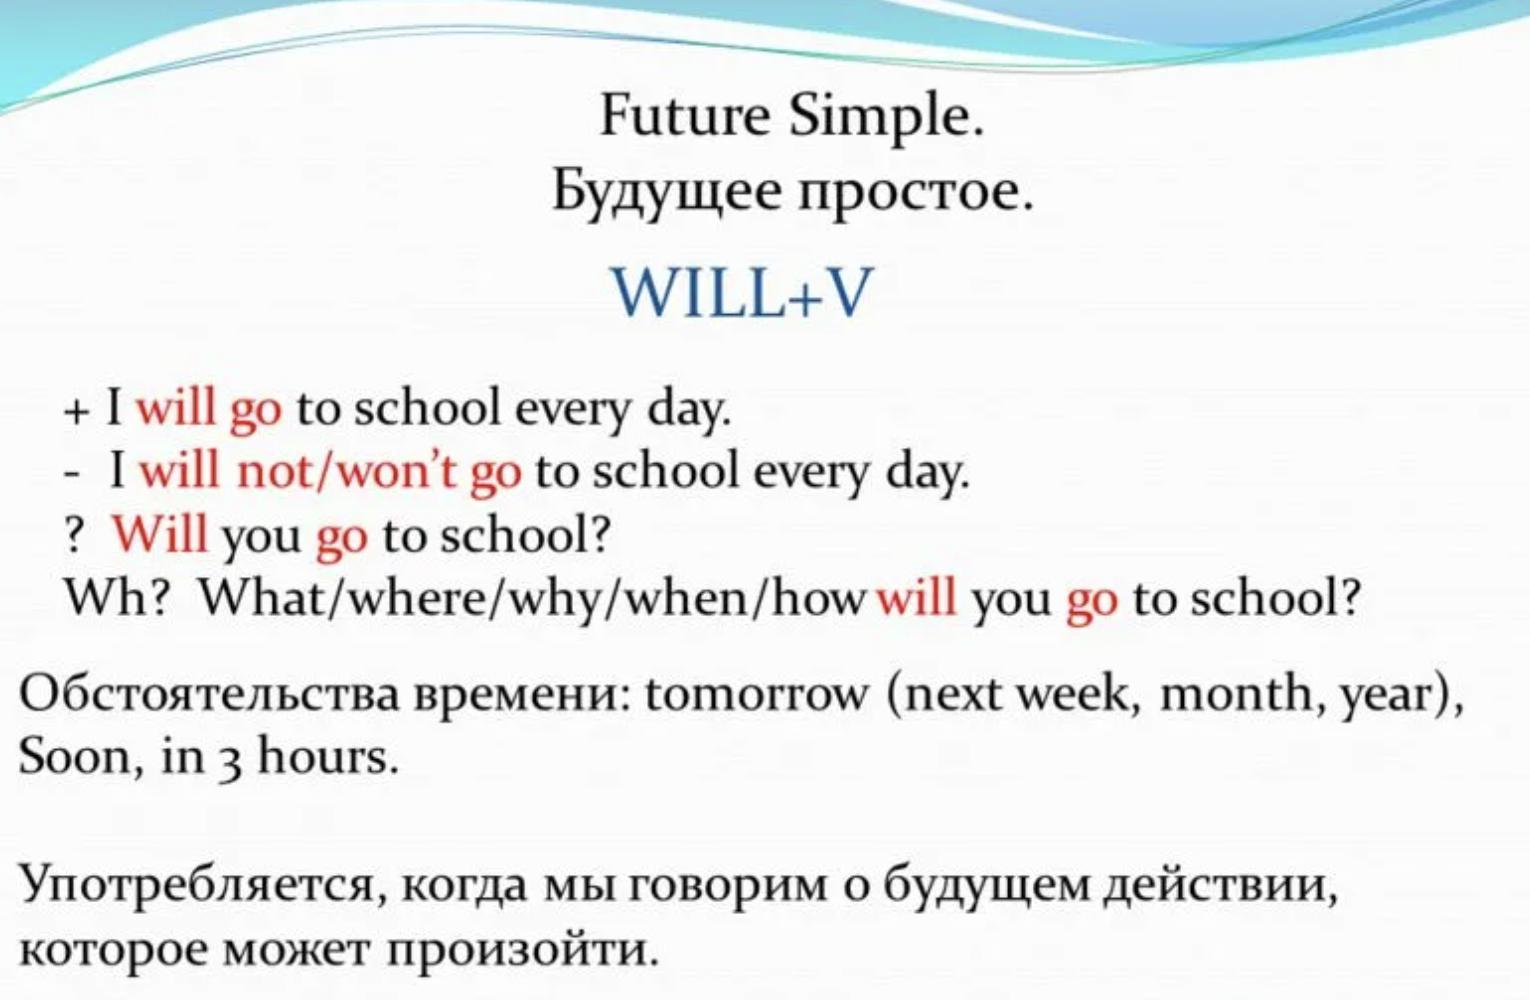 Future simple в английском правила. Future simple простое будущее время правило. Правило по английскому Future simple. Формула Future simple в английском языке. Действие которое обозначает Future simple.